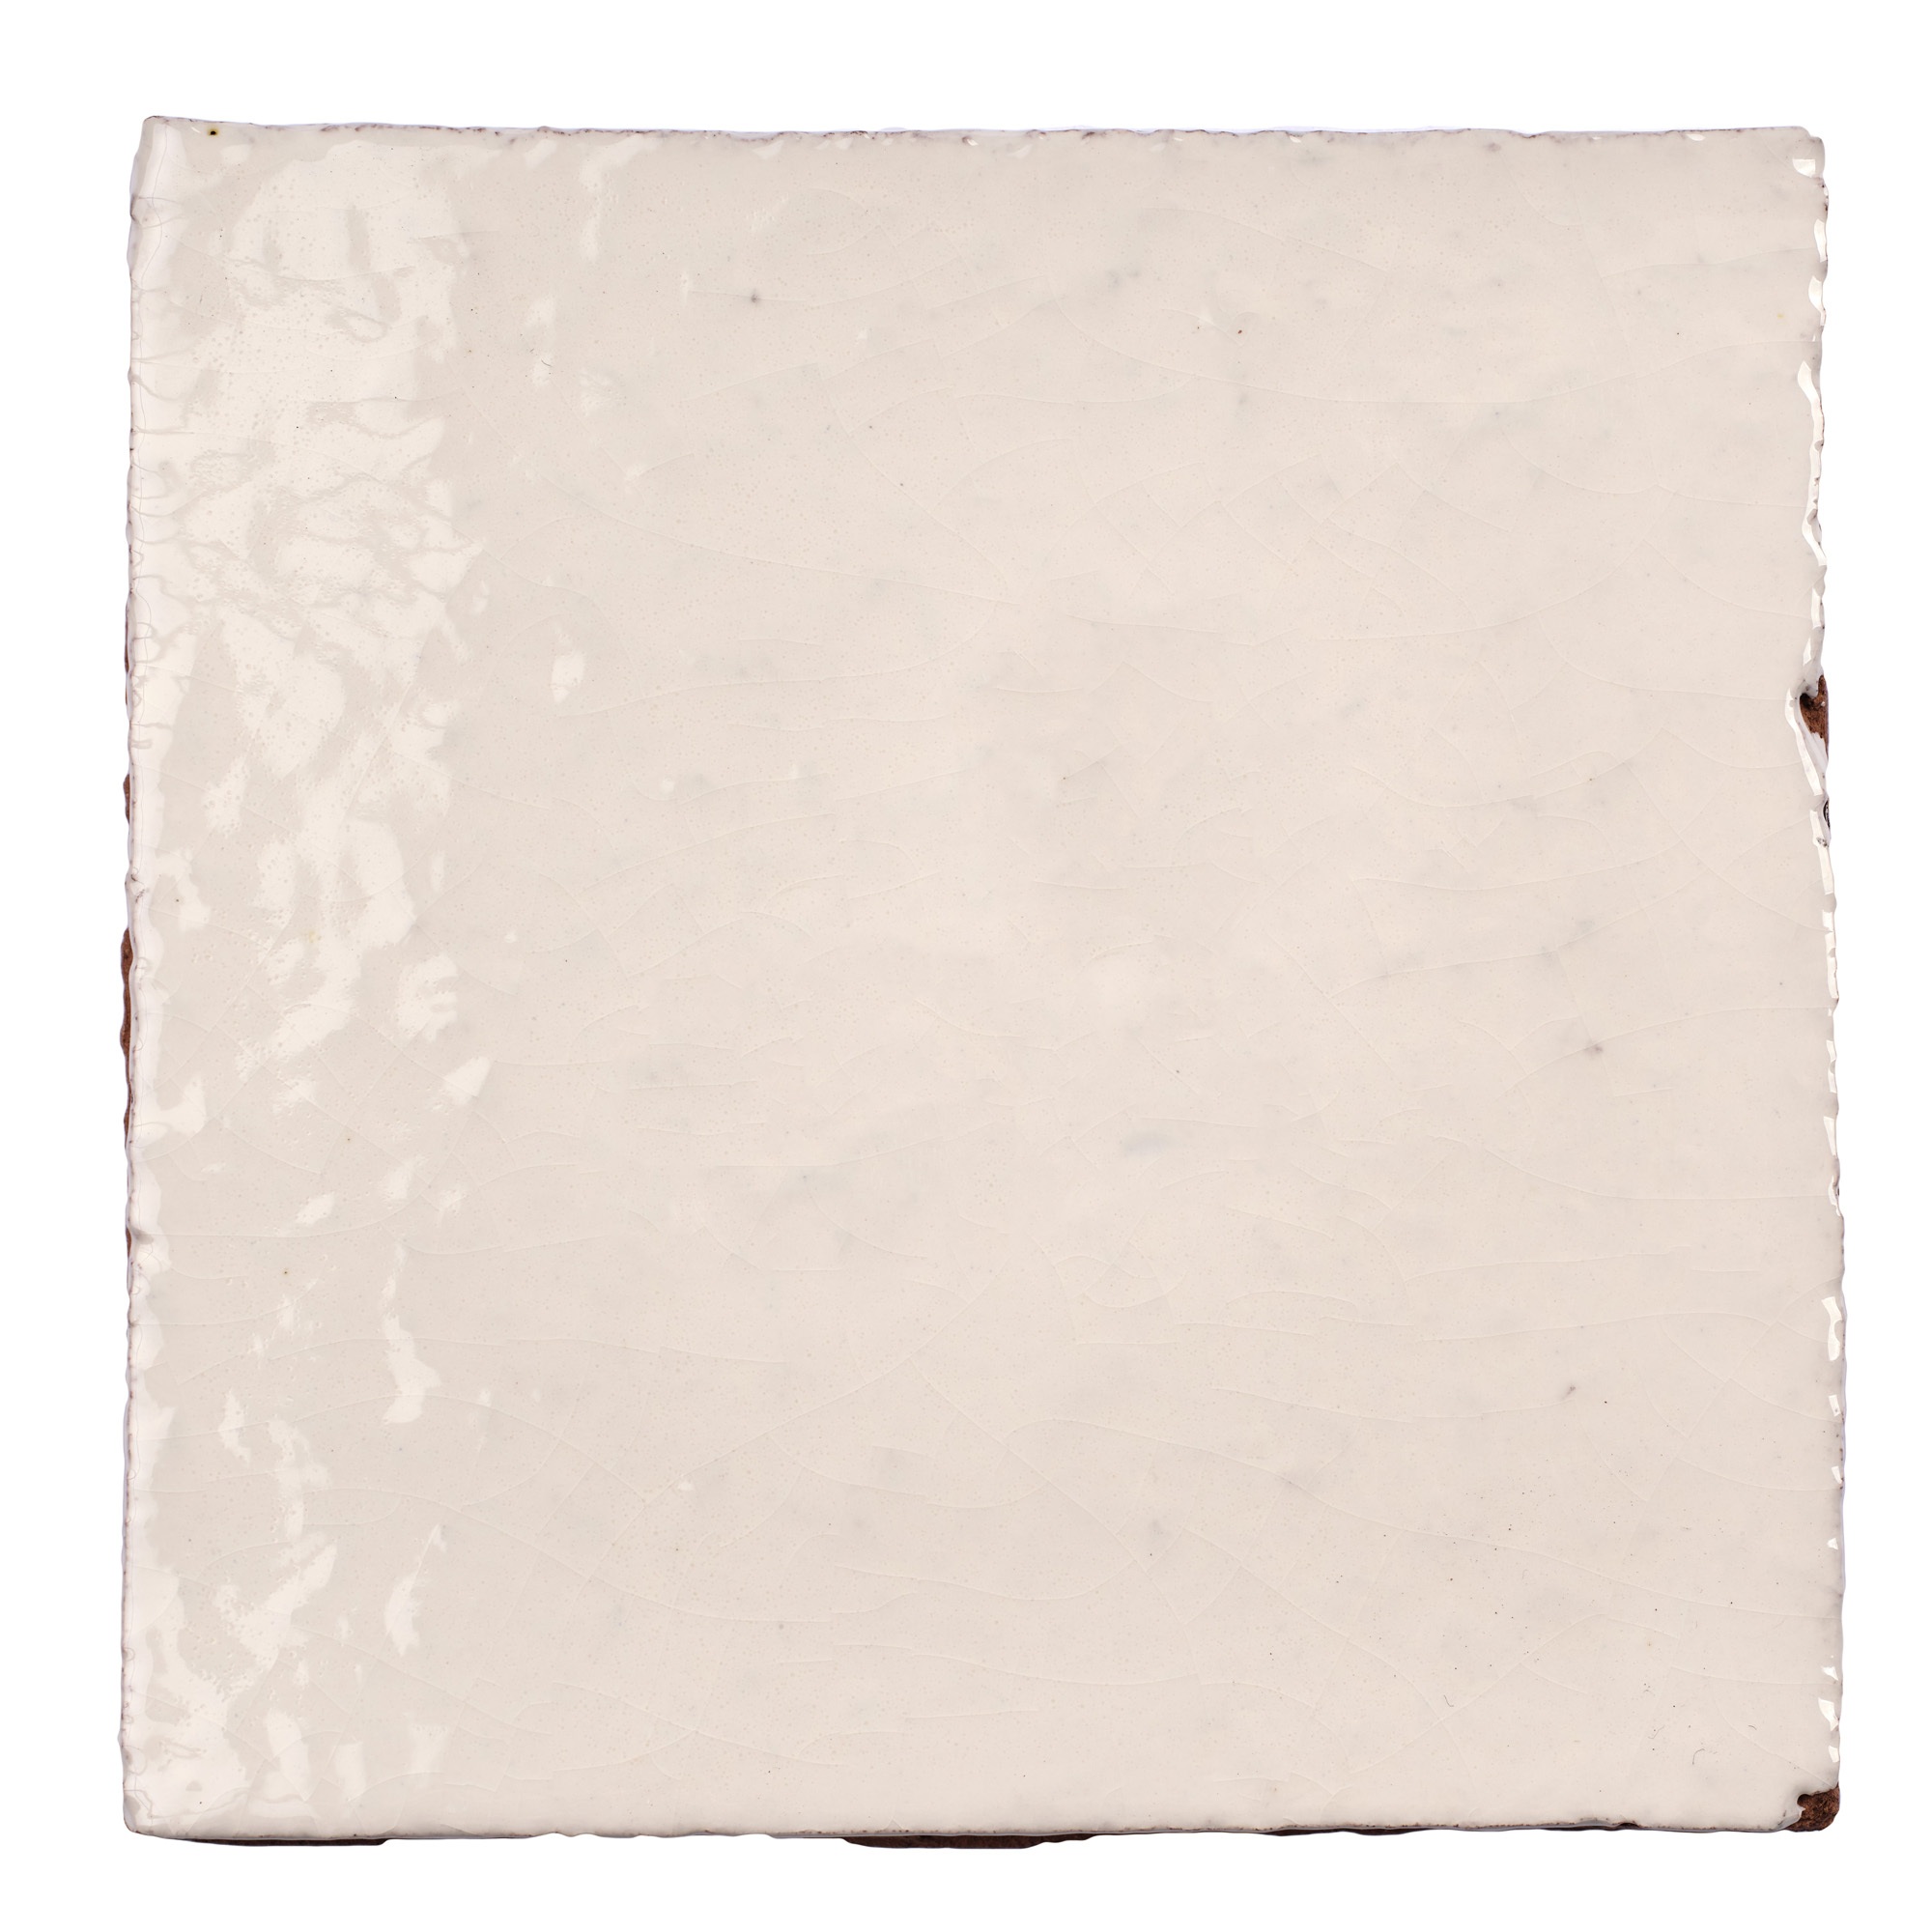 Wilding Plain Tile Square, product variant image